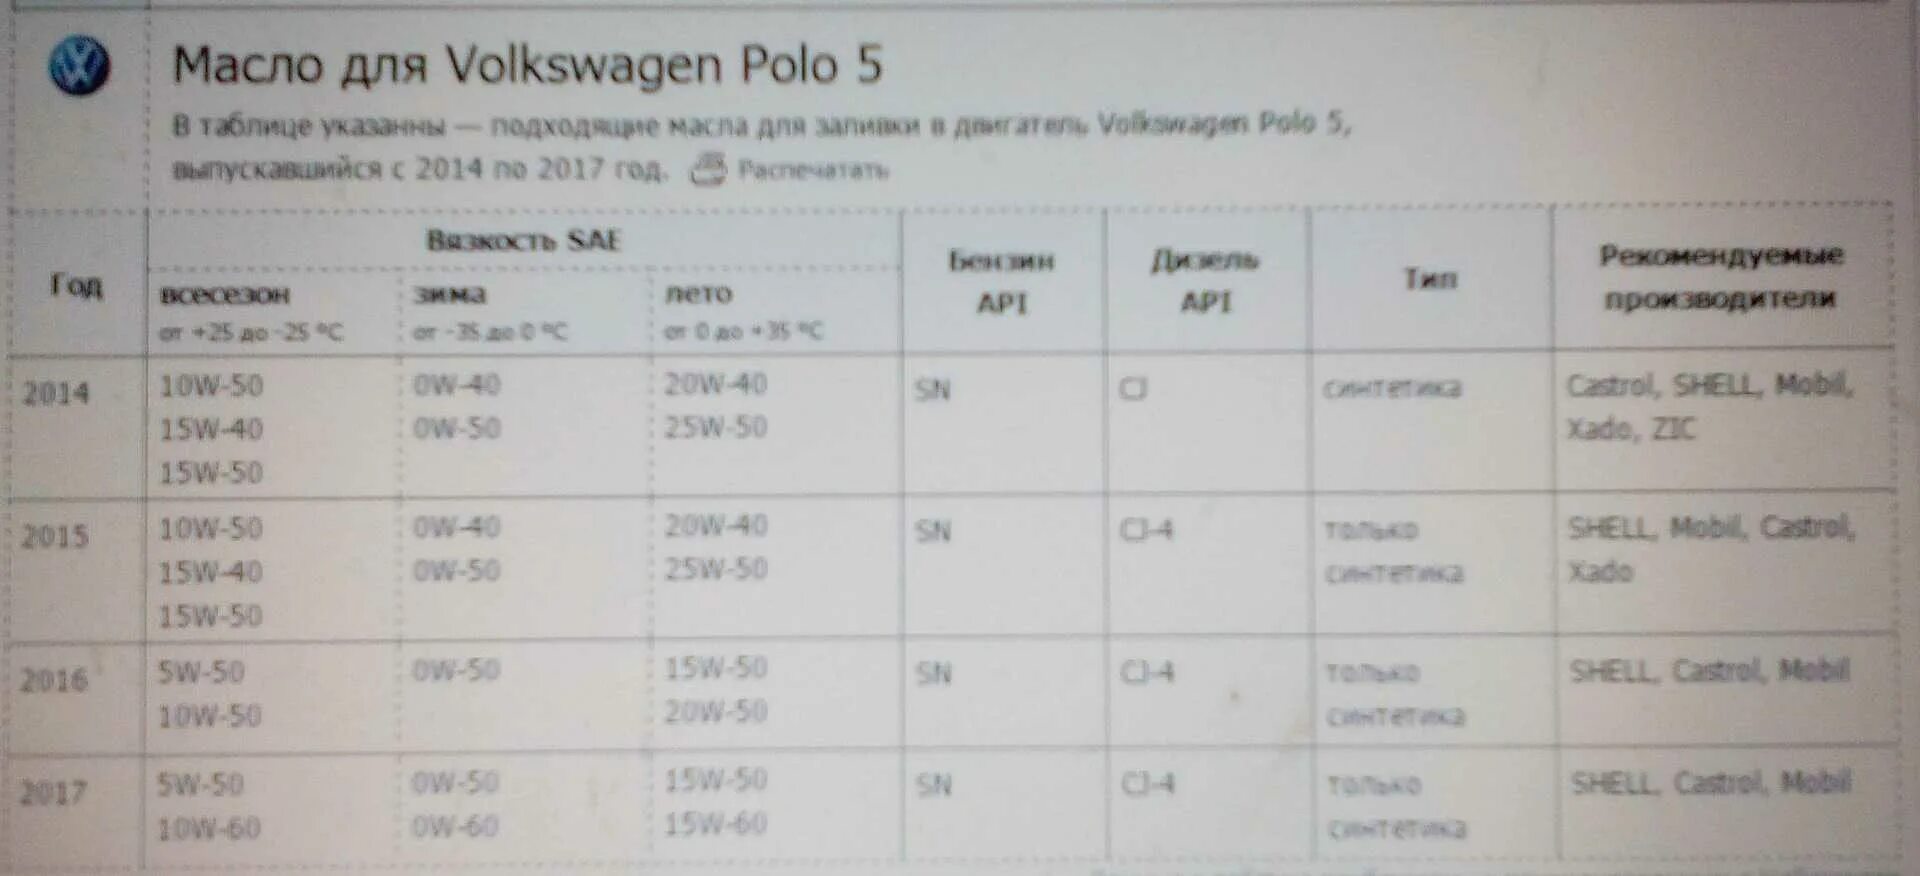 Polo sedan 1.6 допуск к маслу. Объем масла Фольксваген поло 1.6. Объем масла в двигателе Фольксваген поло 1.6 110. Масло VW Polo sedan 1.6 110.